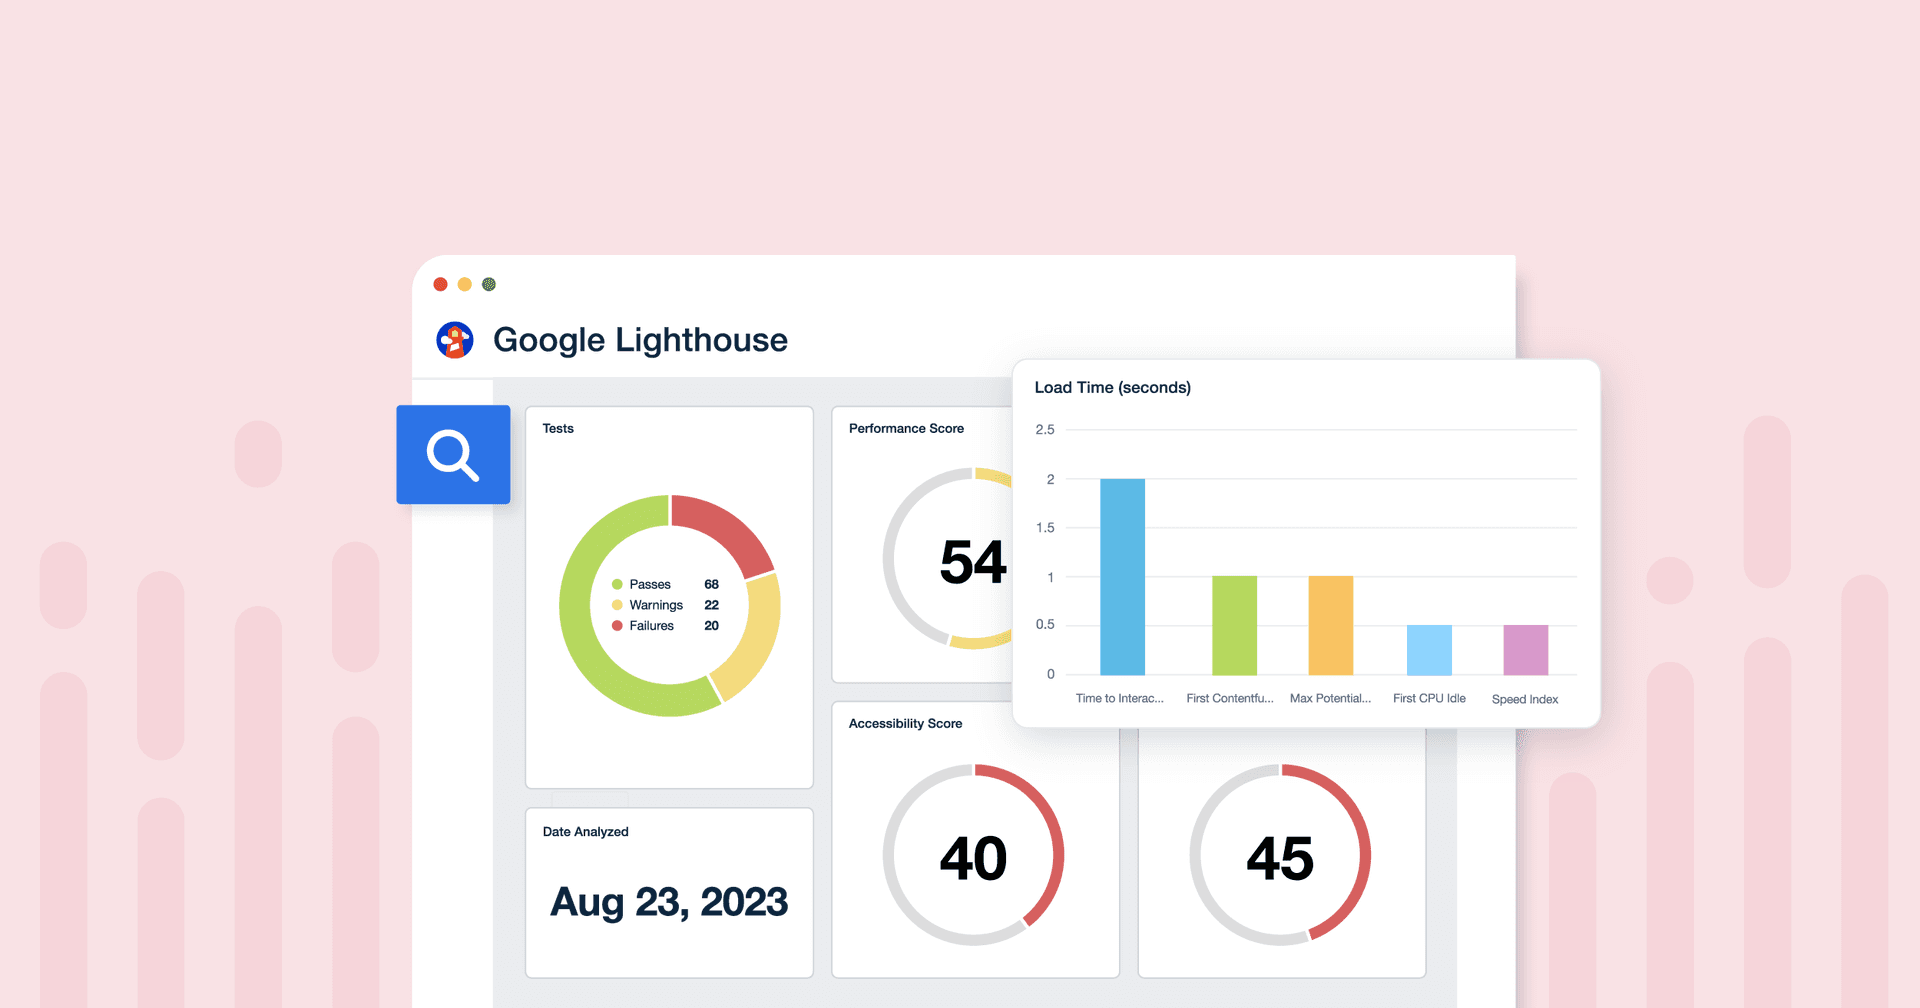 Google Lighthouse Metrics to Track - Hero Image